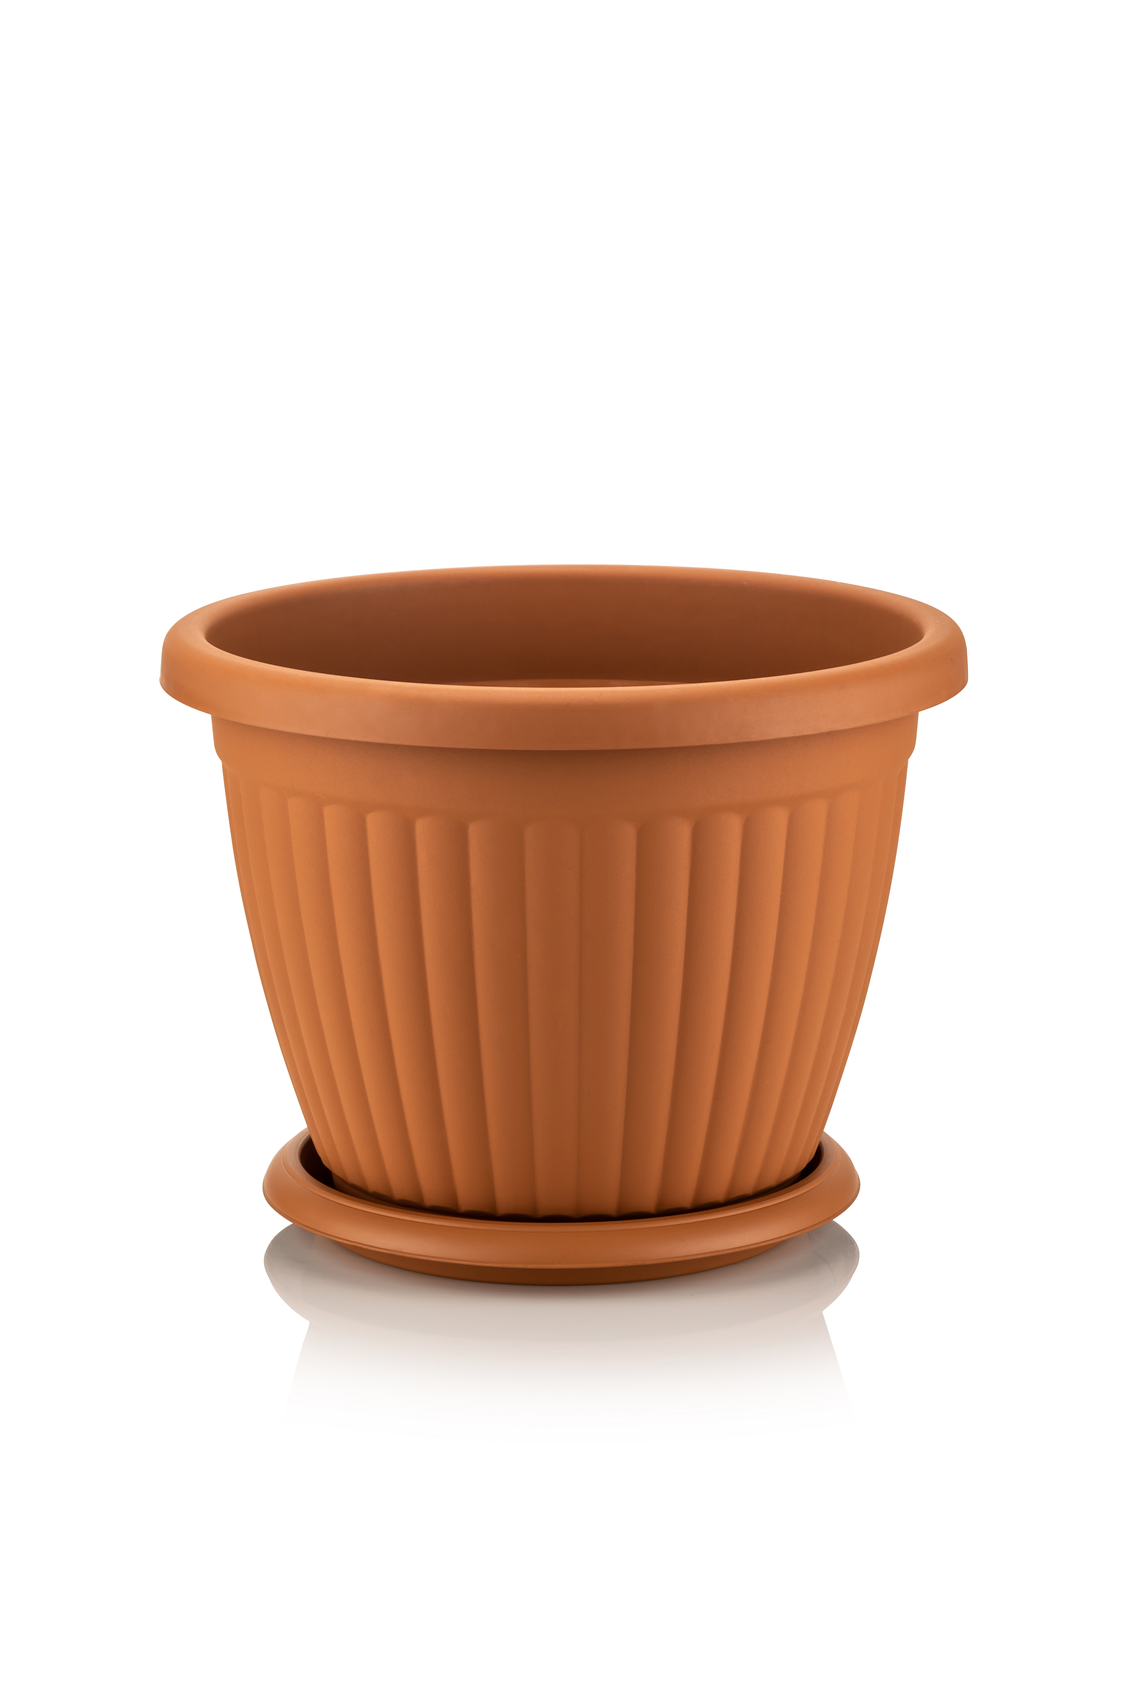 Buy Plastic Pot Ksg7 Kms7 - 11.5ltr Online | Agriculture Gardening Tools | Qetaat.com